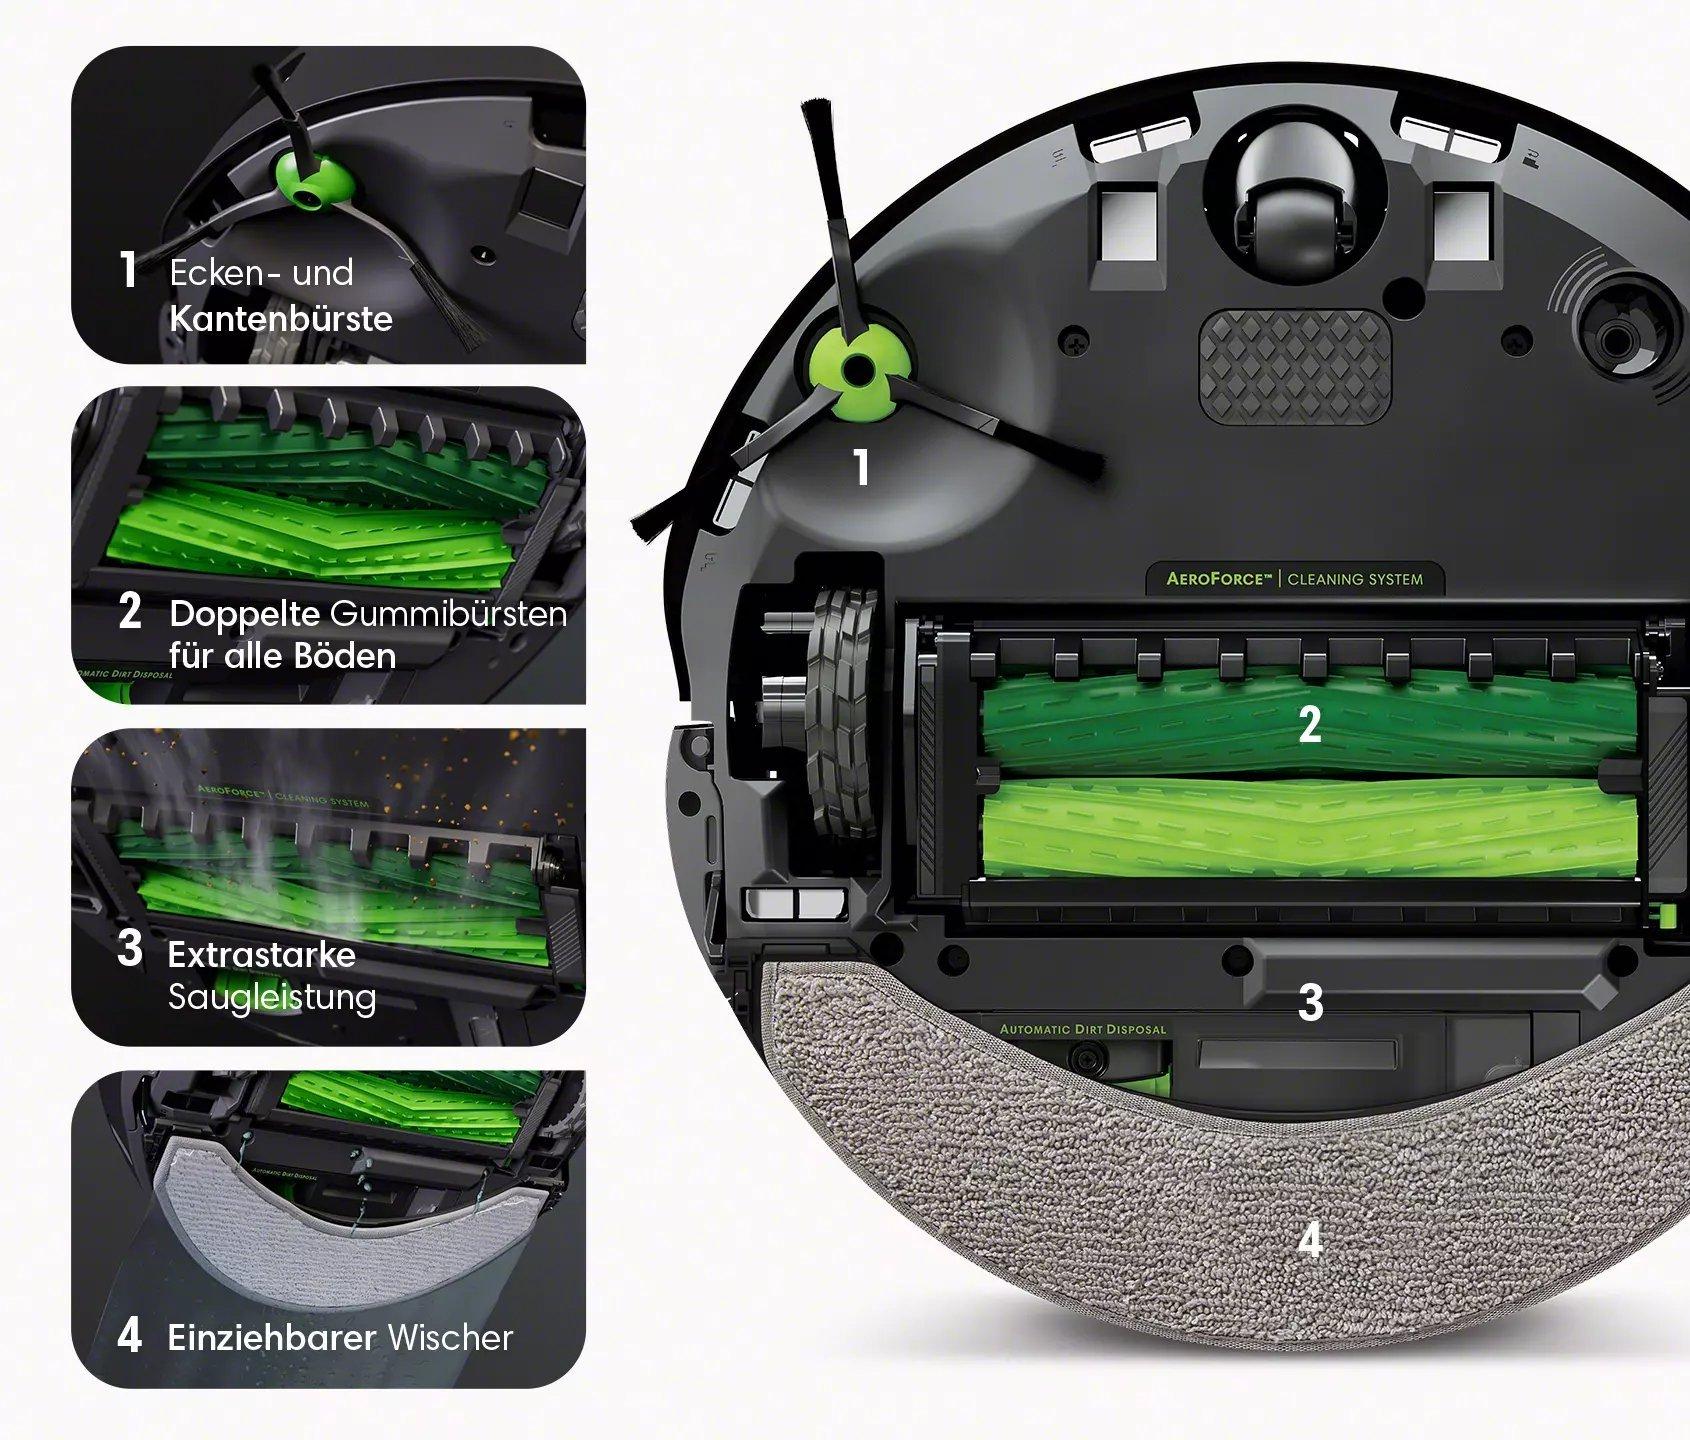 Combo® iRobot | j7 WLAN-Verbindung und Roomba Saug- mit Wischroboter